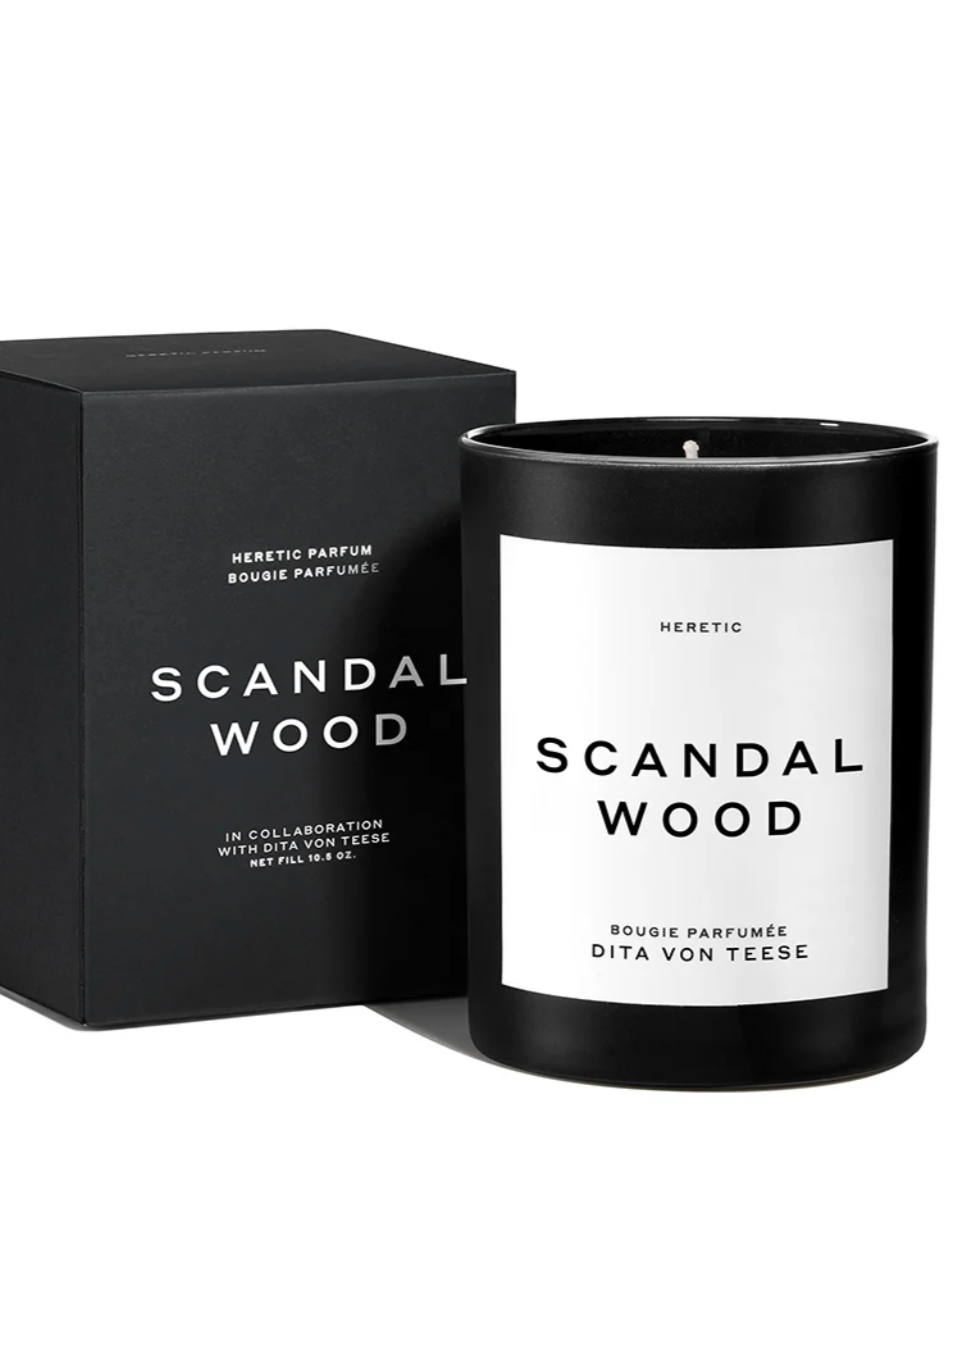 Heretic Parfum Scandalwood Candle 